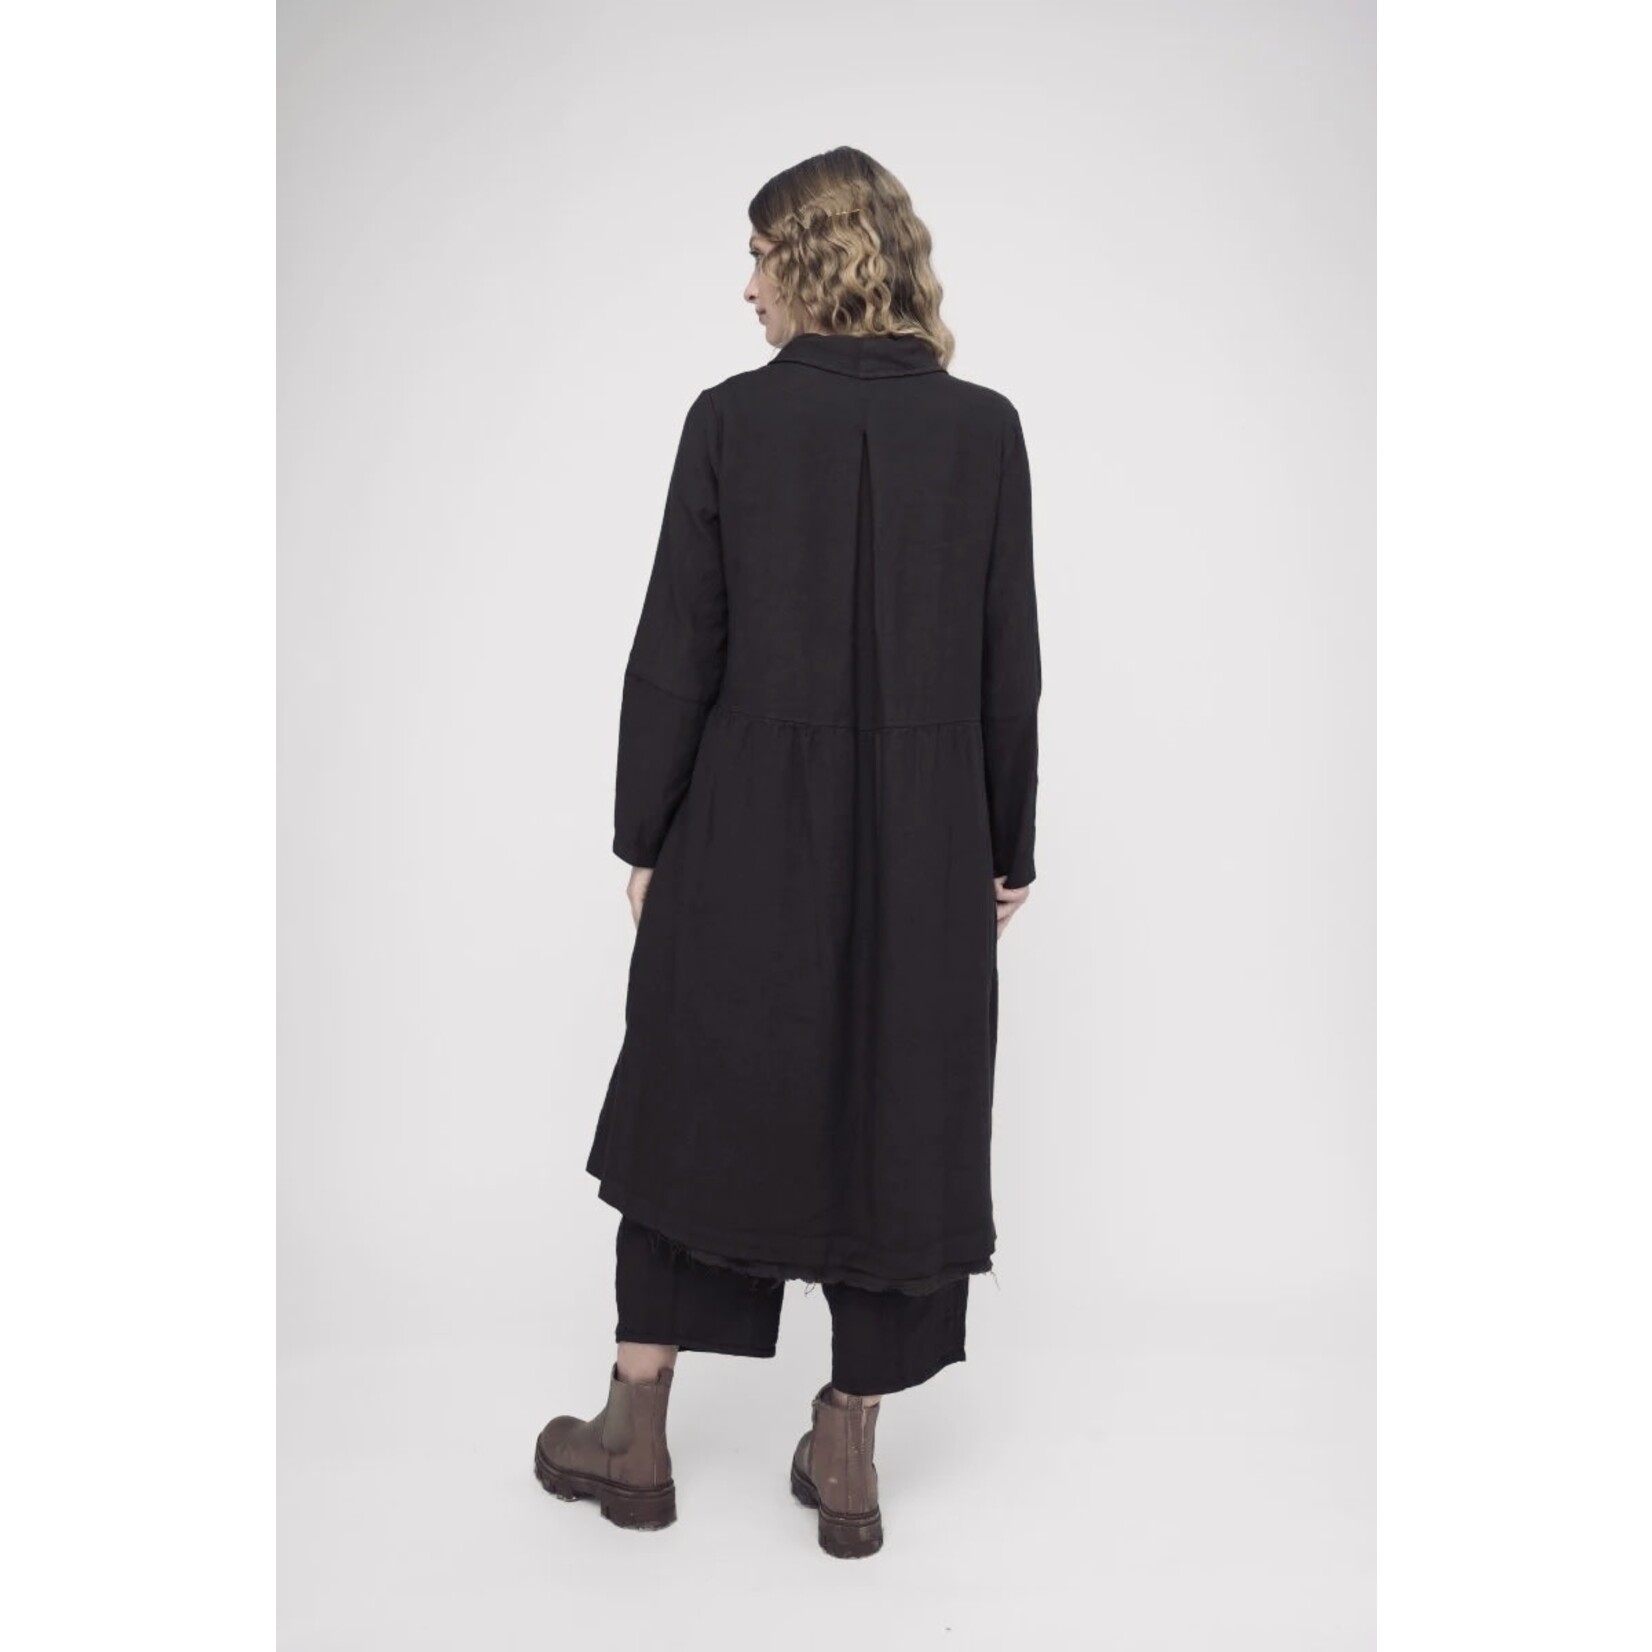 Baci Cotton Linen Overcoat Dress in Black